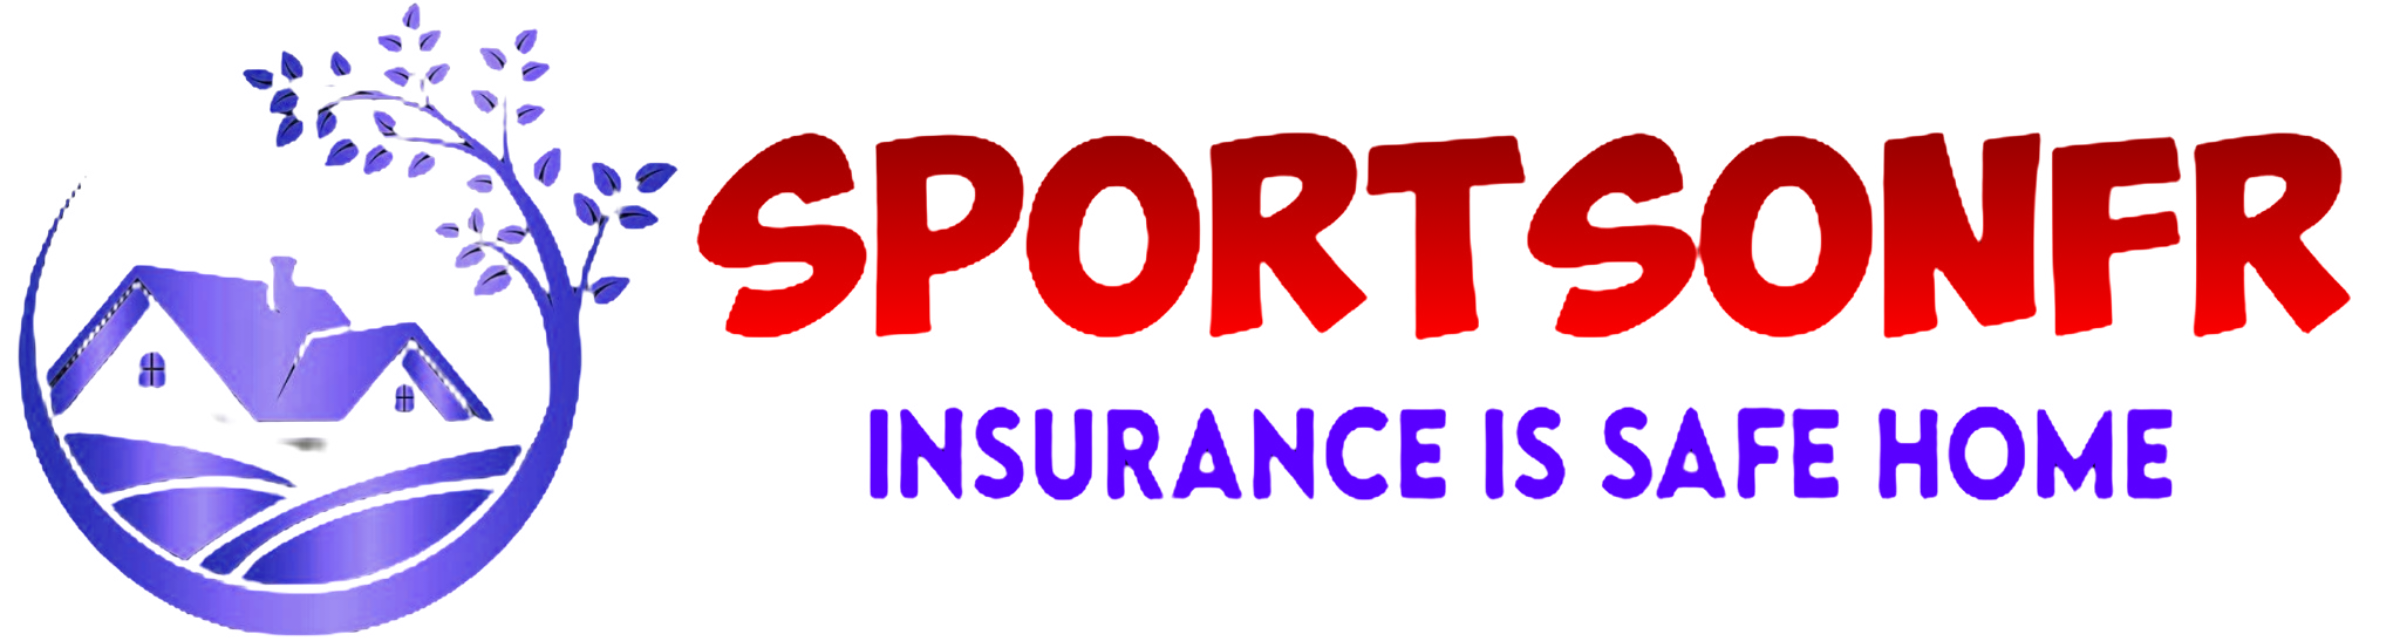 Sports on Insurance